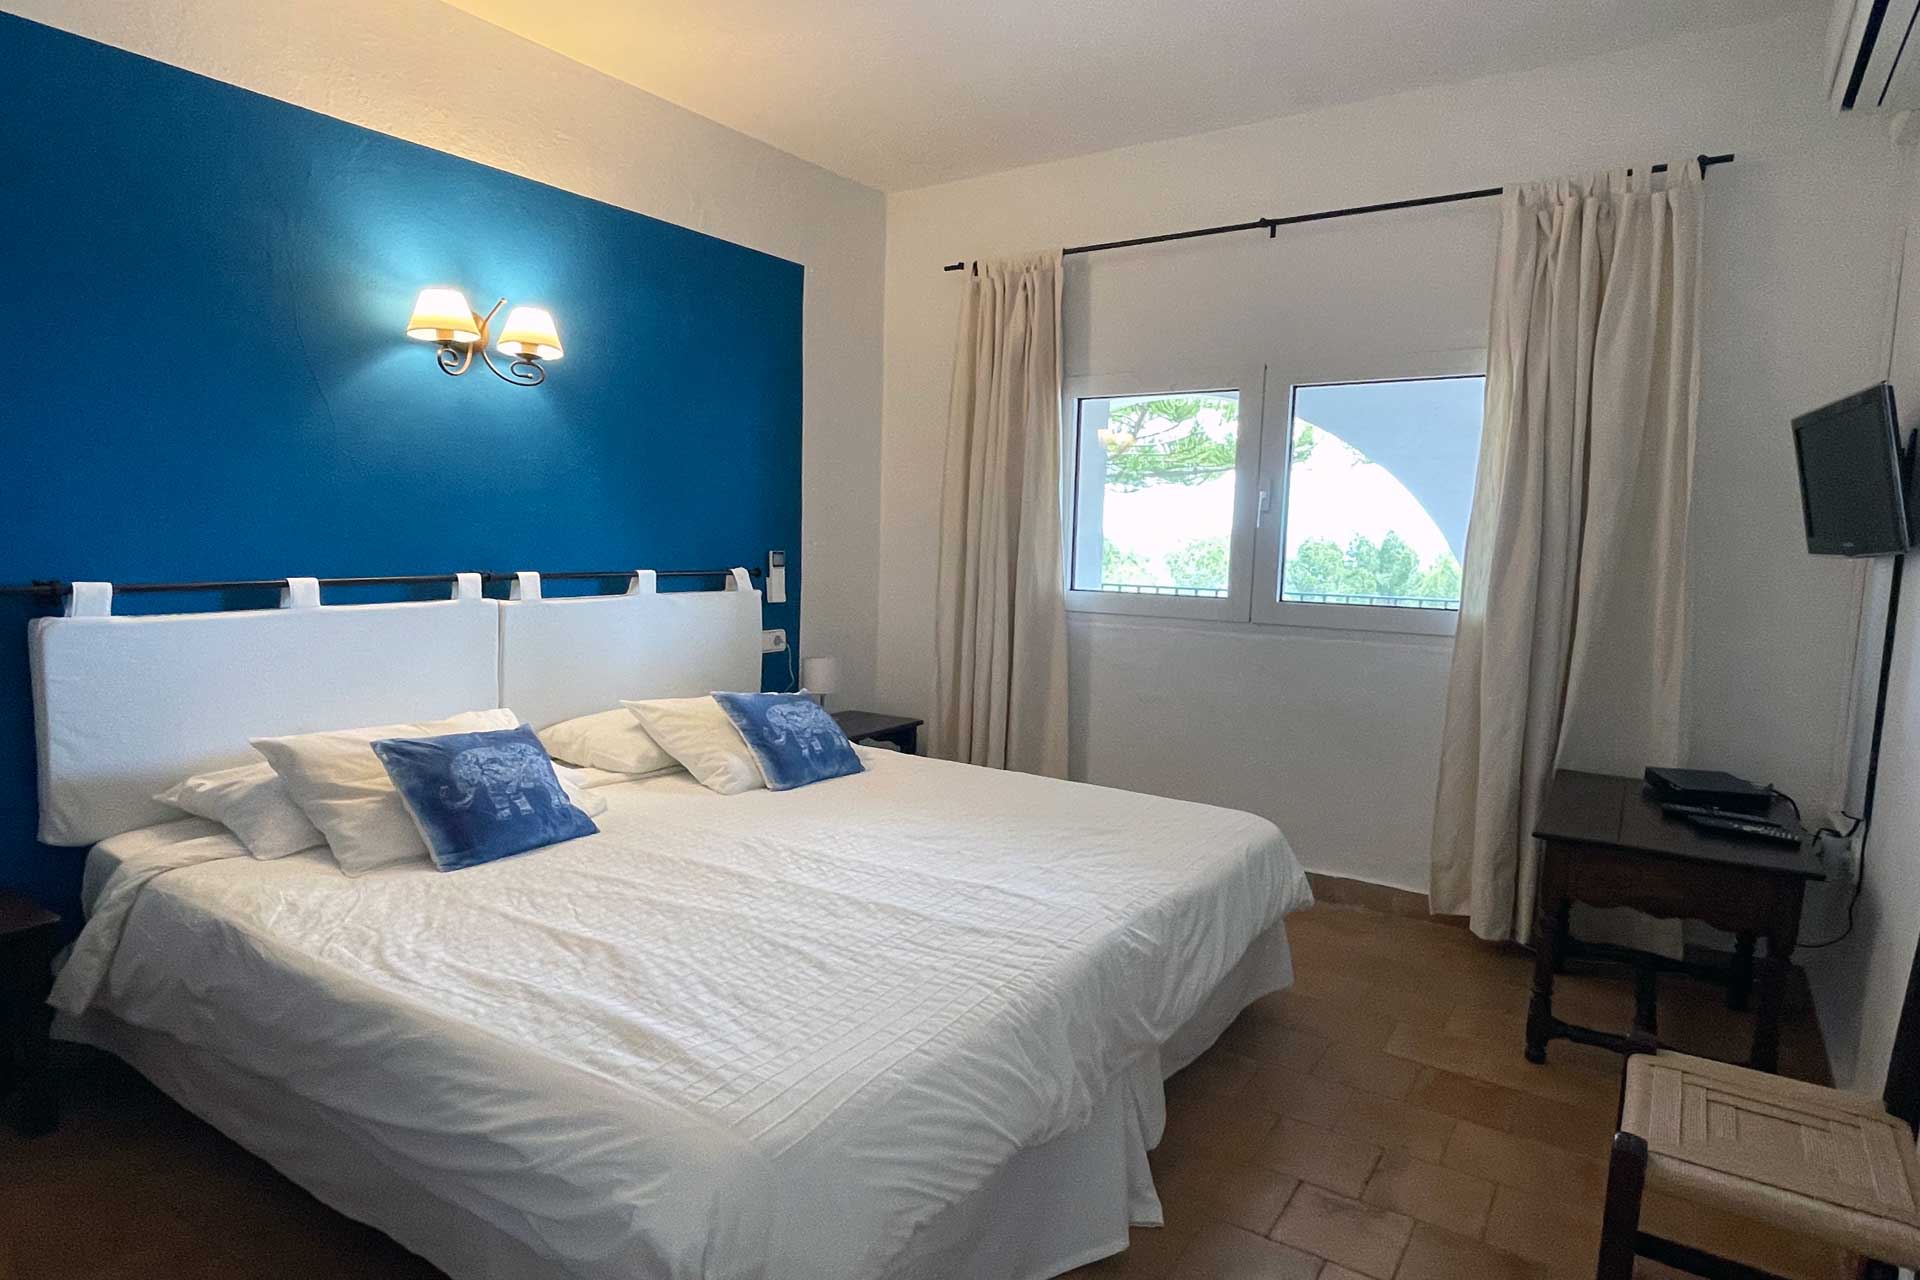 Shangri-La Blue Bedroom